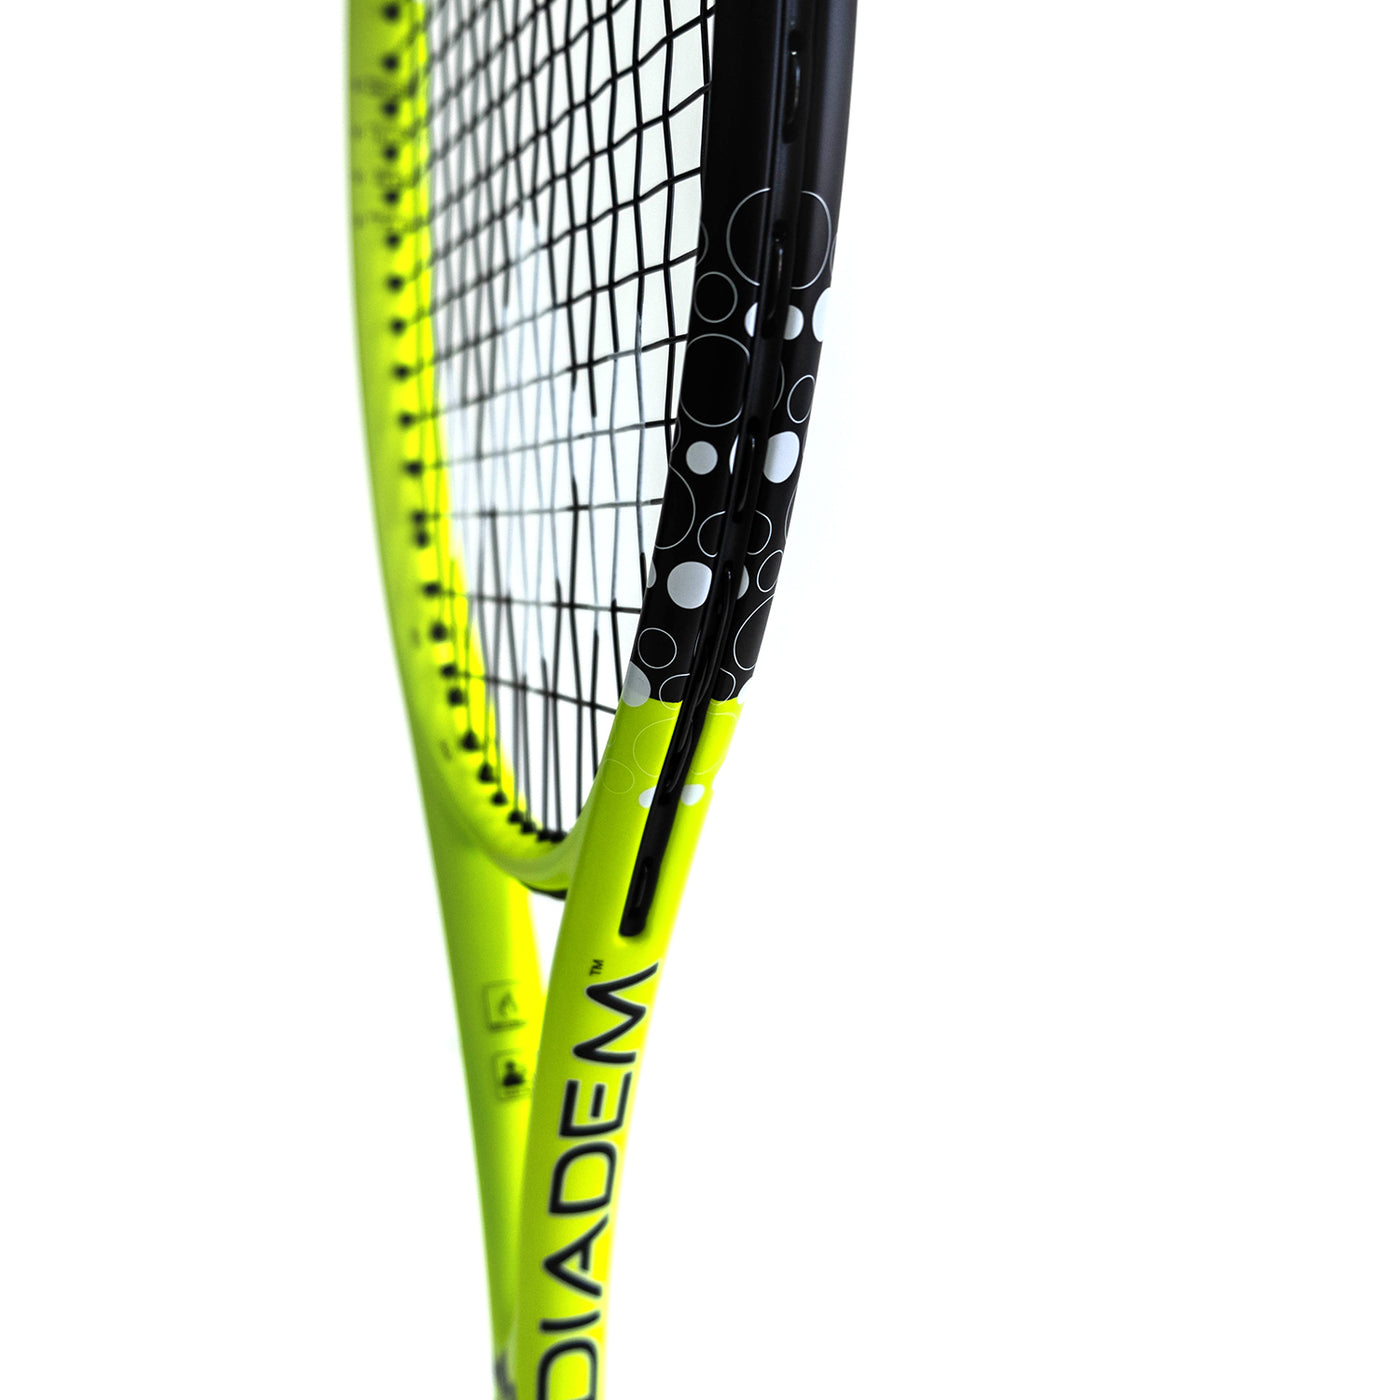  Didiseaon 6 Pcs Racket Sweatband Tennis Racket Over